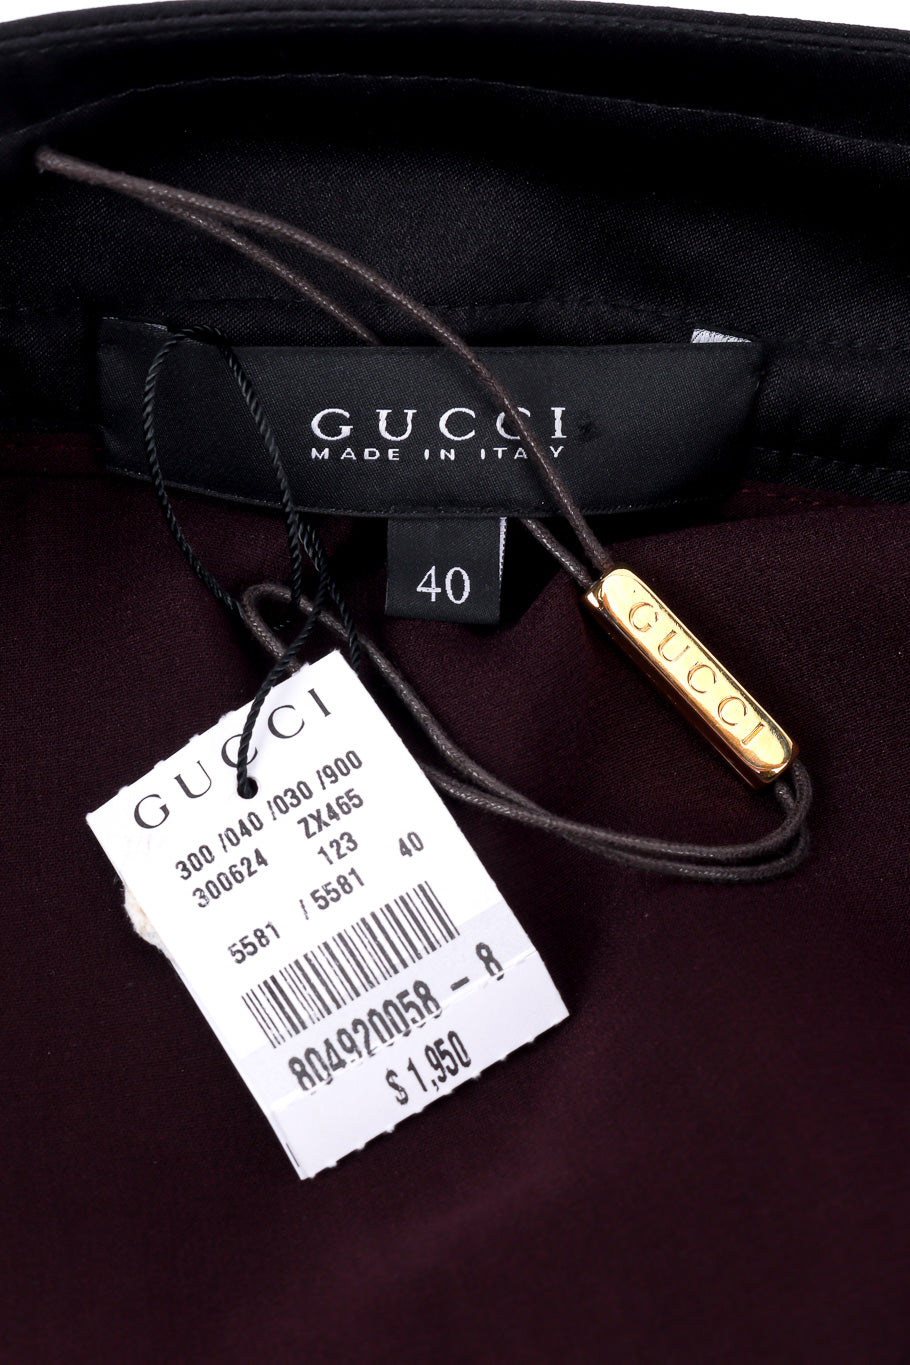 Gucci Velvet Burnout Wrap Skirt label and original tag closeup @Recessla